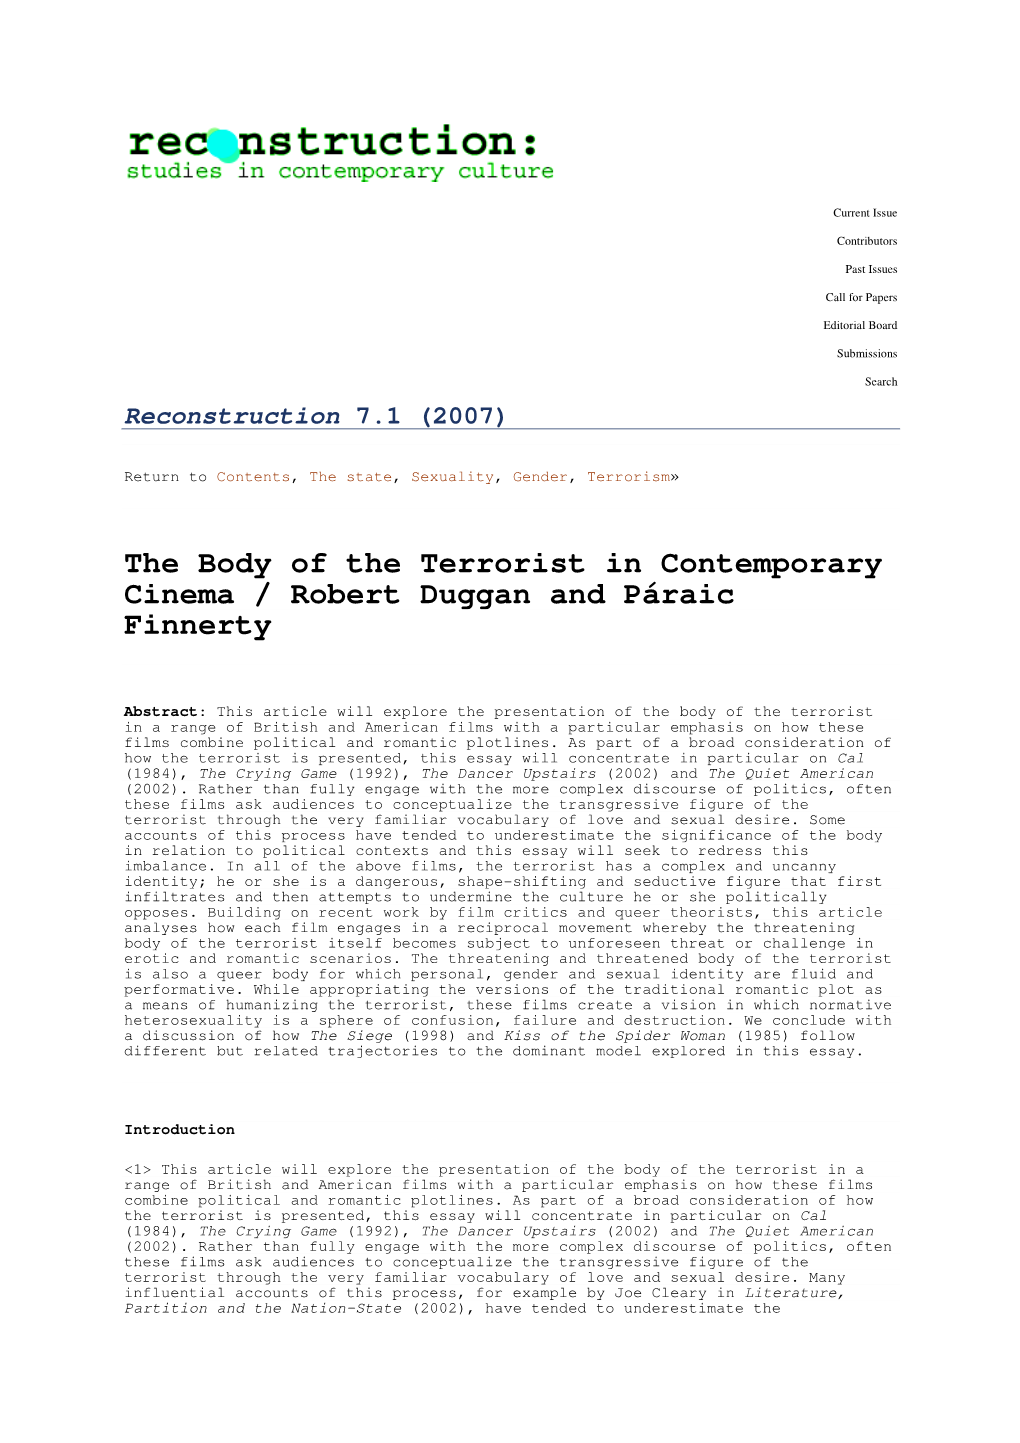 The Body of the Terrorist in Contemporary Cinema / Robert Duggan and Páraic Finnerty